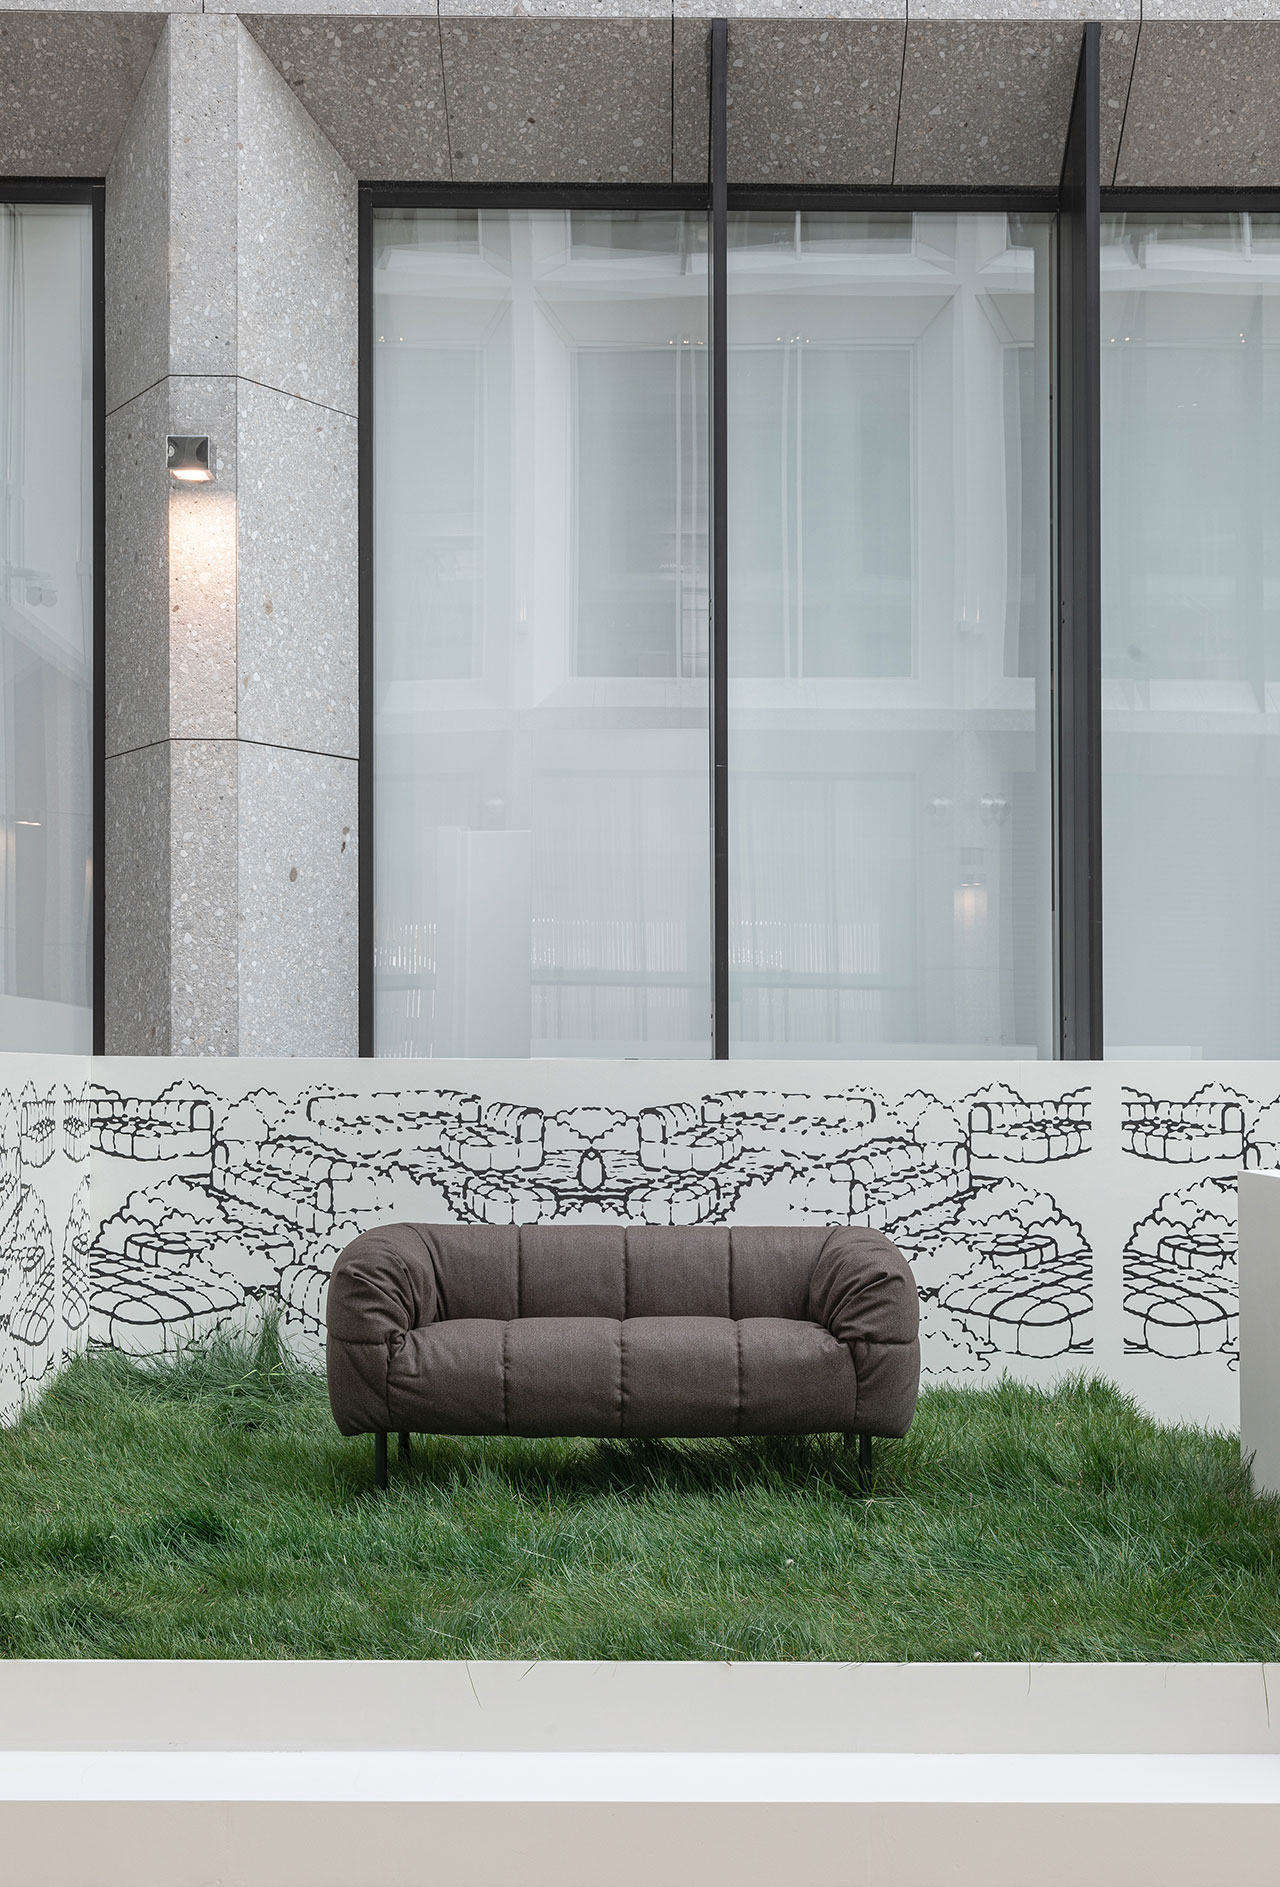 Pecorelle Sofa. Designed by Cini Boeri for artflex in 1972. Upholstery: Loro Piana Interiors Pecora Nera® in two natural shades, Undyed.
Photography © Loro Piana.